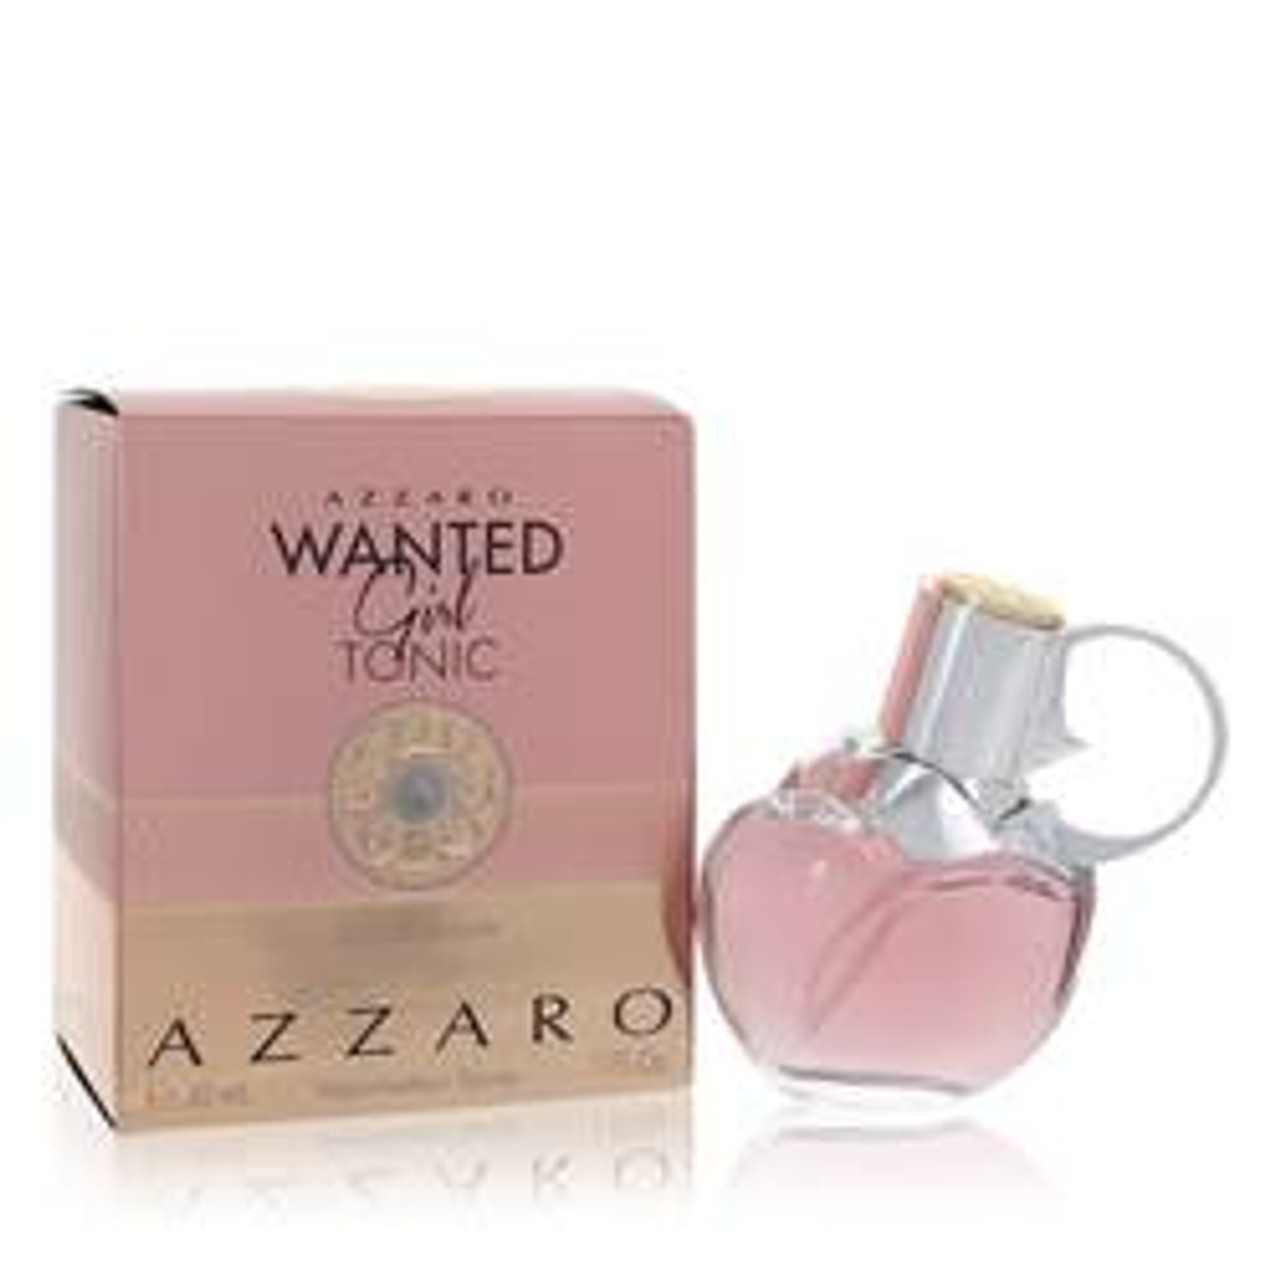 Azzaro Wanted Girl Tonic Perfume By Azzaro Eau De Toilette Spray 1 oz for Women - [From 50.33 - Choose pk Qty ] - *Ships from Miami